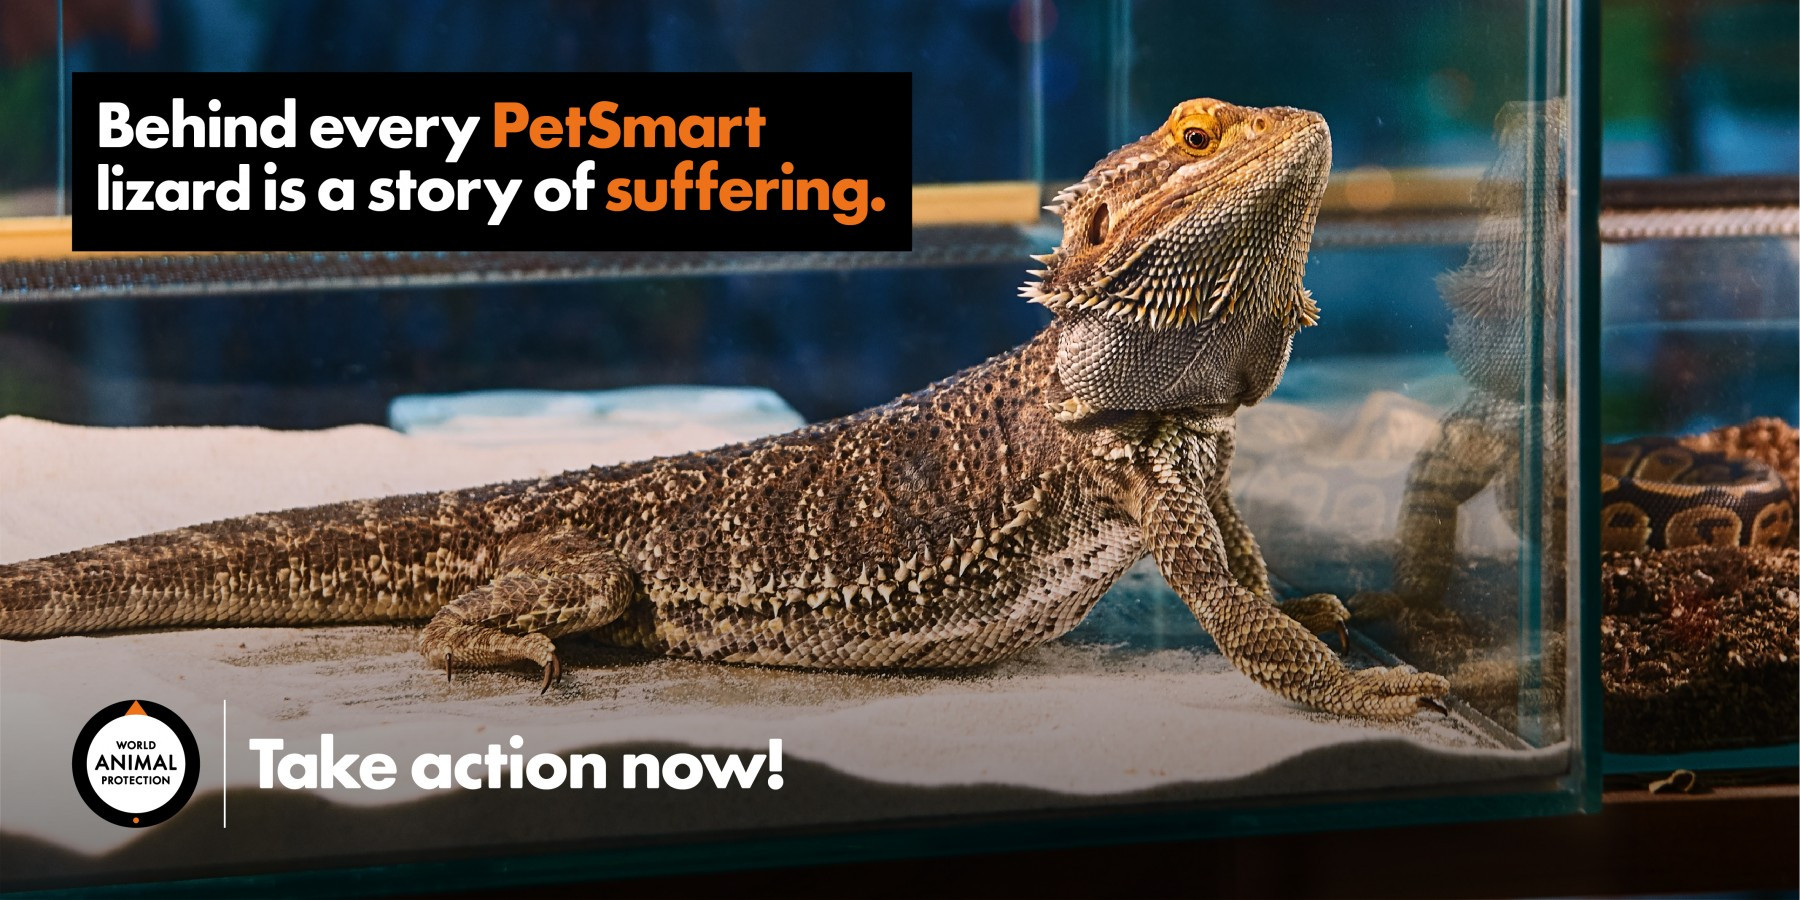 Lizards are suffering. PetSmart must act!